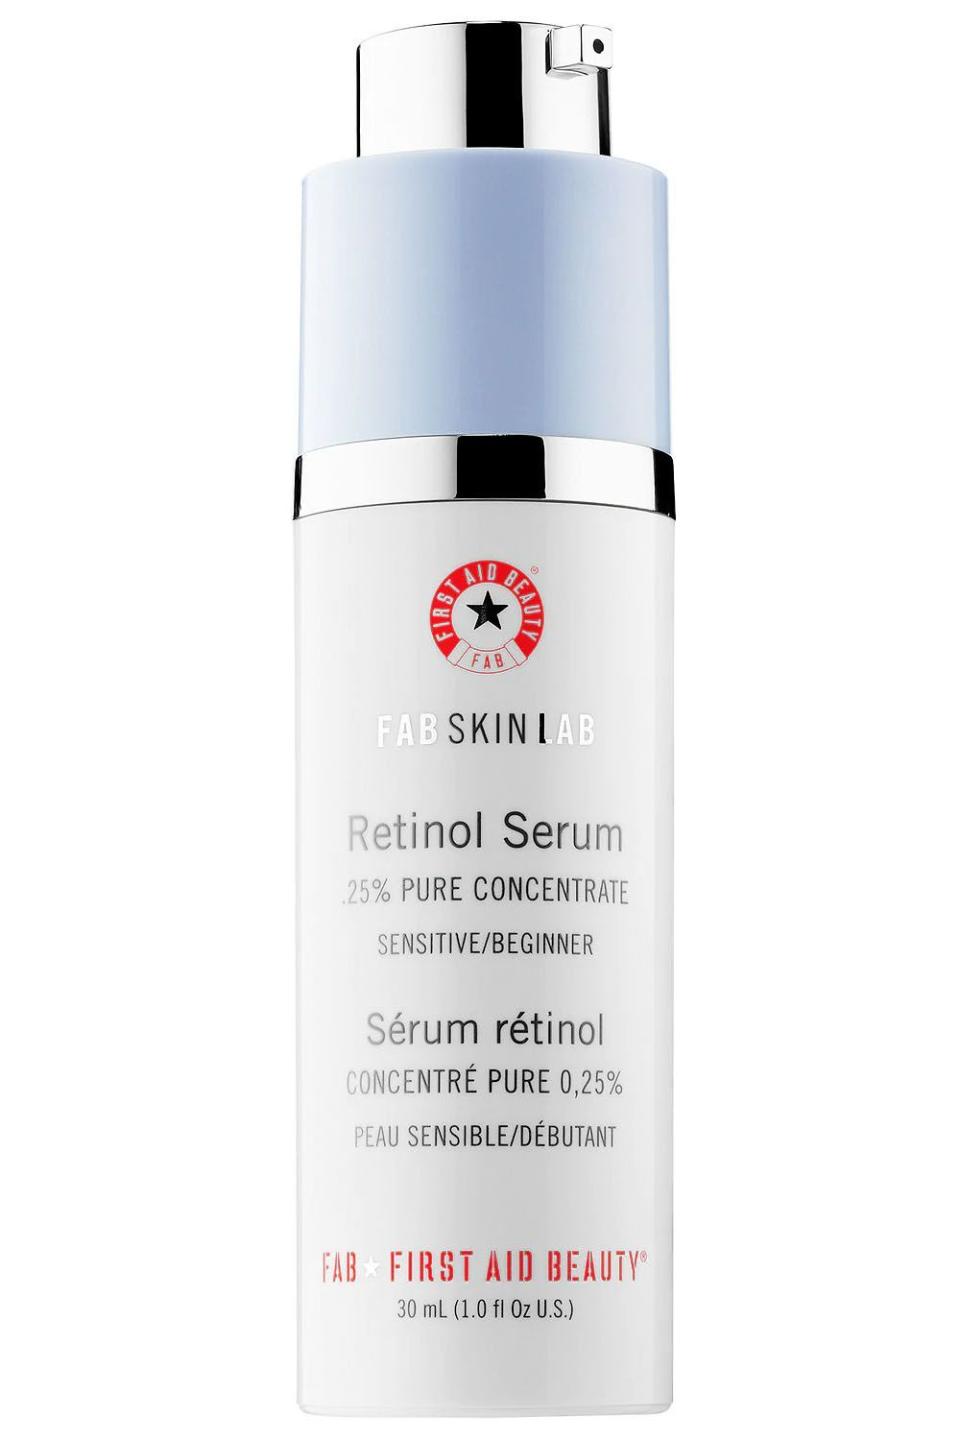 6) FAB Skin Lab Retinol Serum 0.25% Pure Concentrate